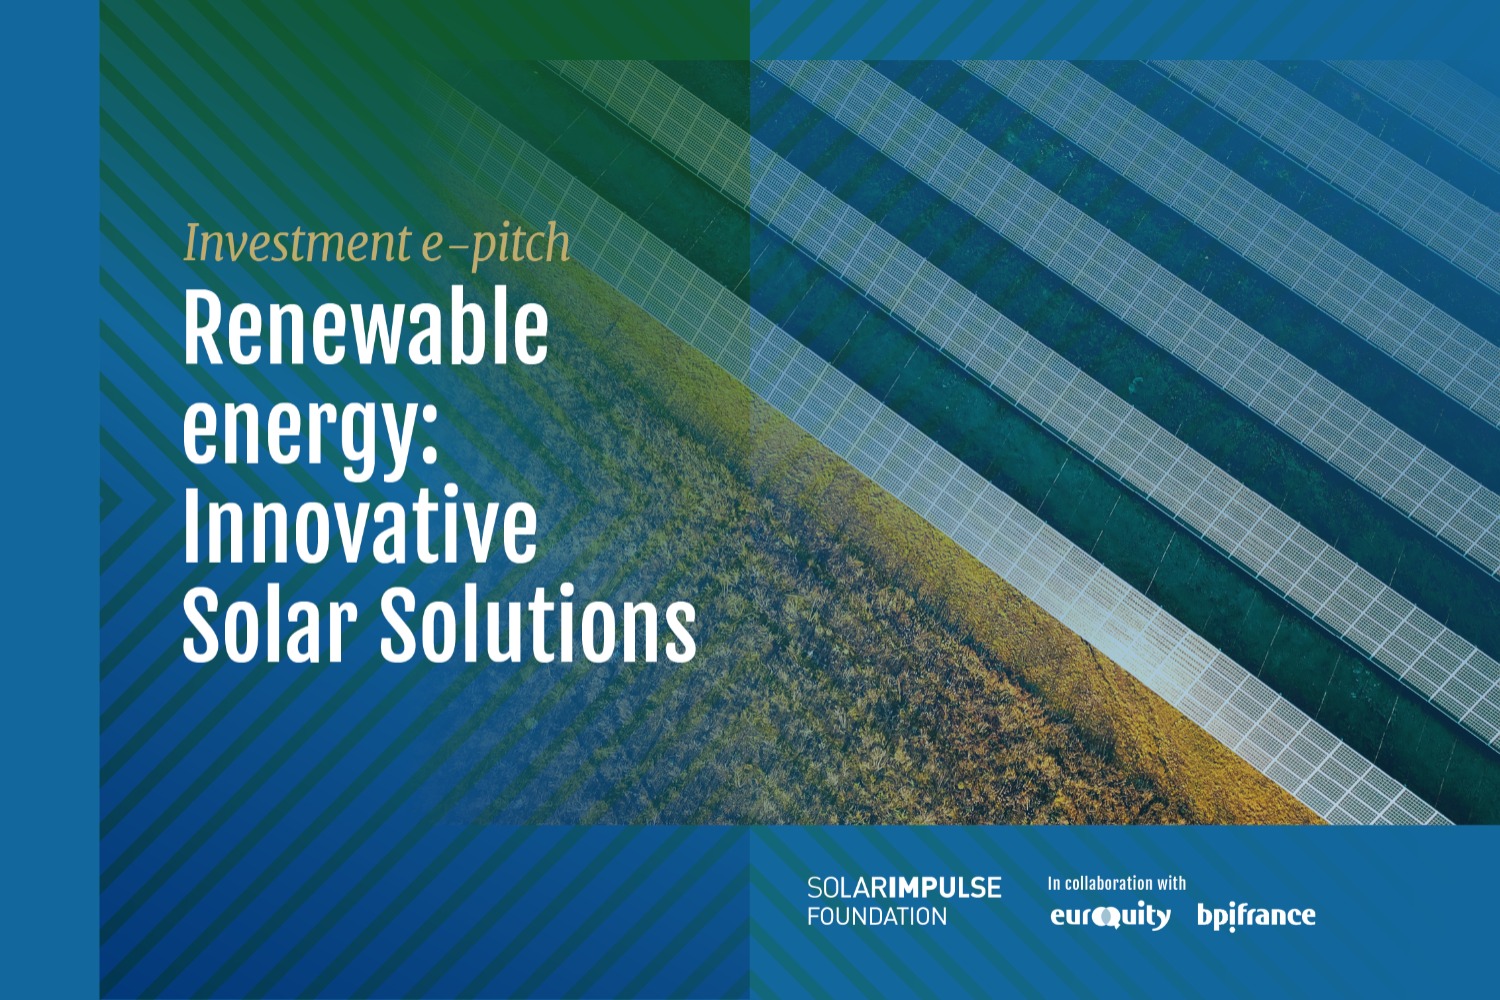 E-Pitch Solar Impulse Investment - "Erneuerbare Energien: Innovative Solarlösungen" 